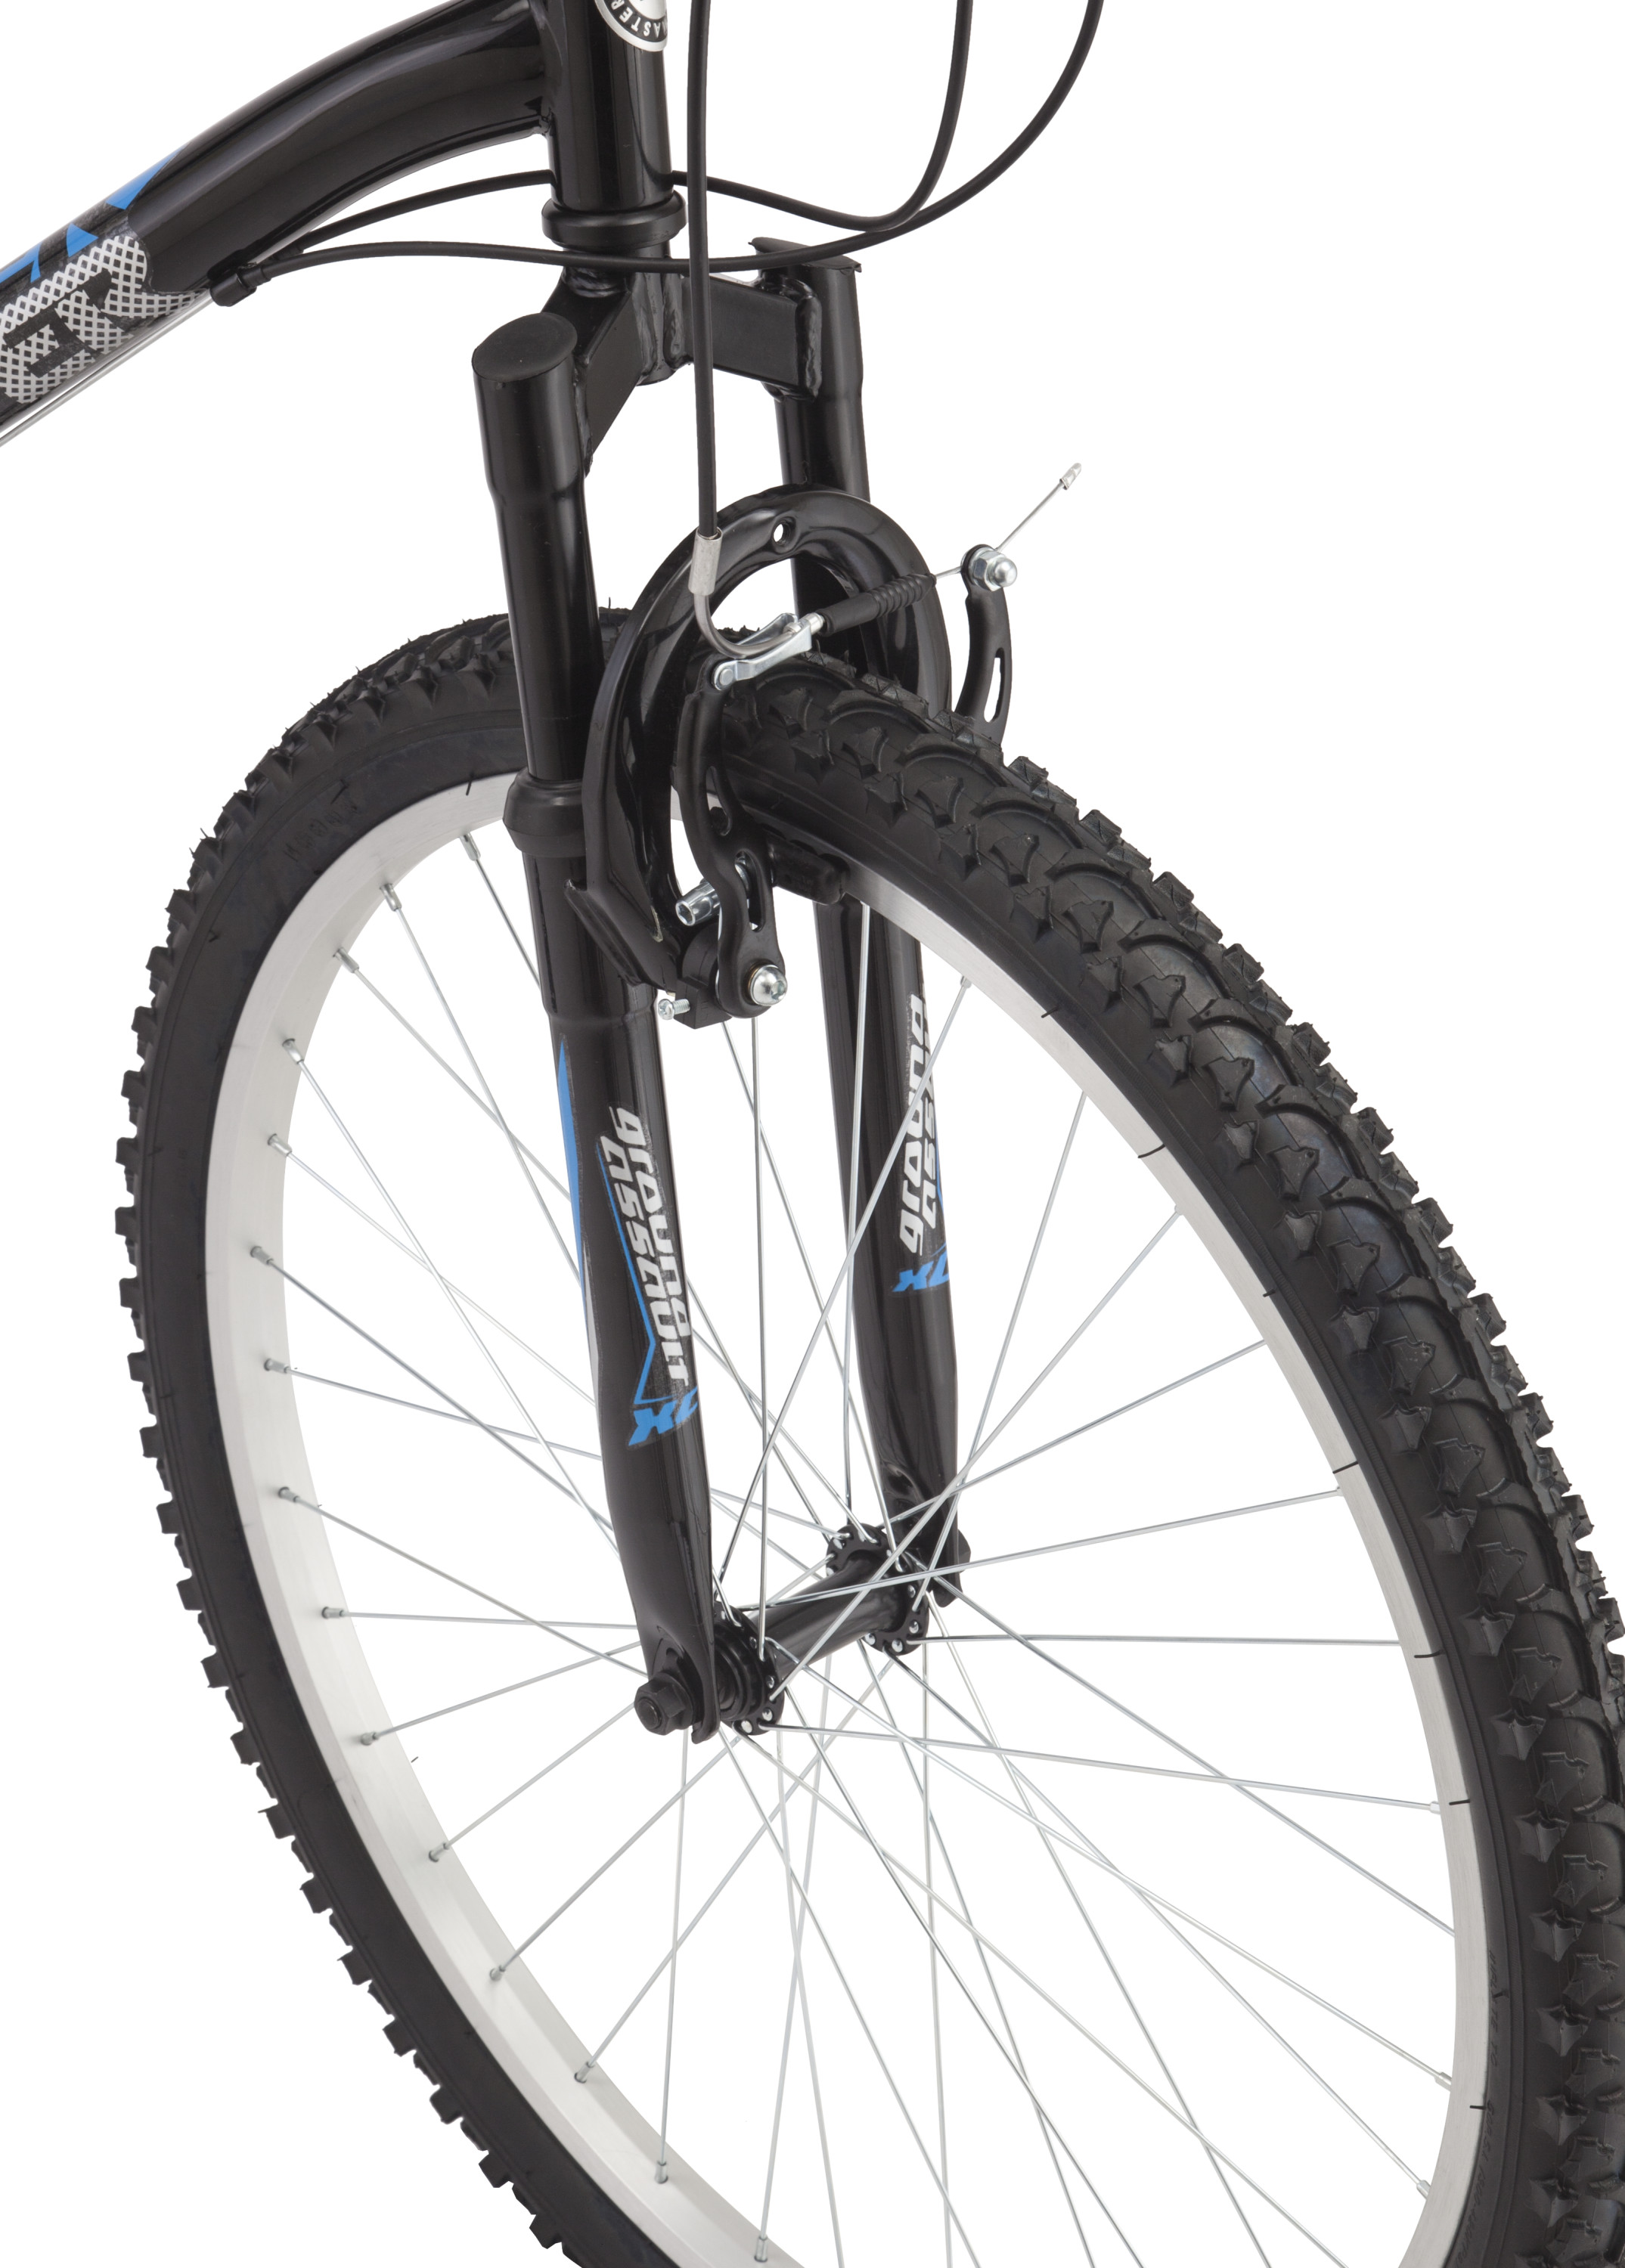 Roadmaster Granite Peak Men's Mountain Bike, 26" wheels, Black/Blue - image 5 of 5